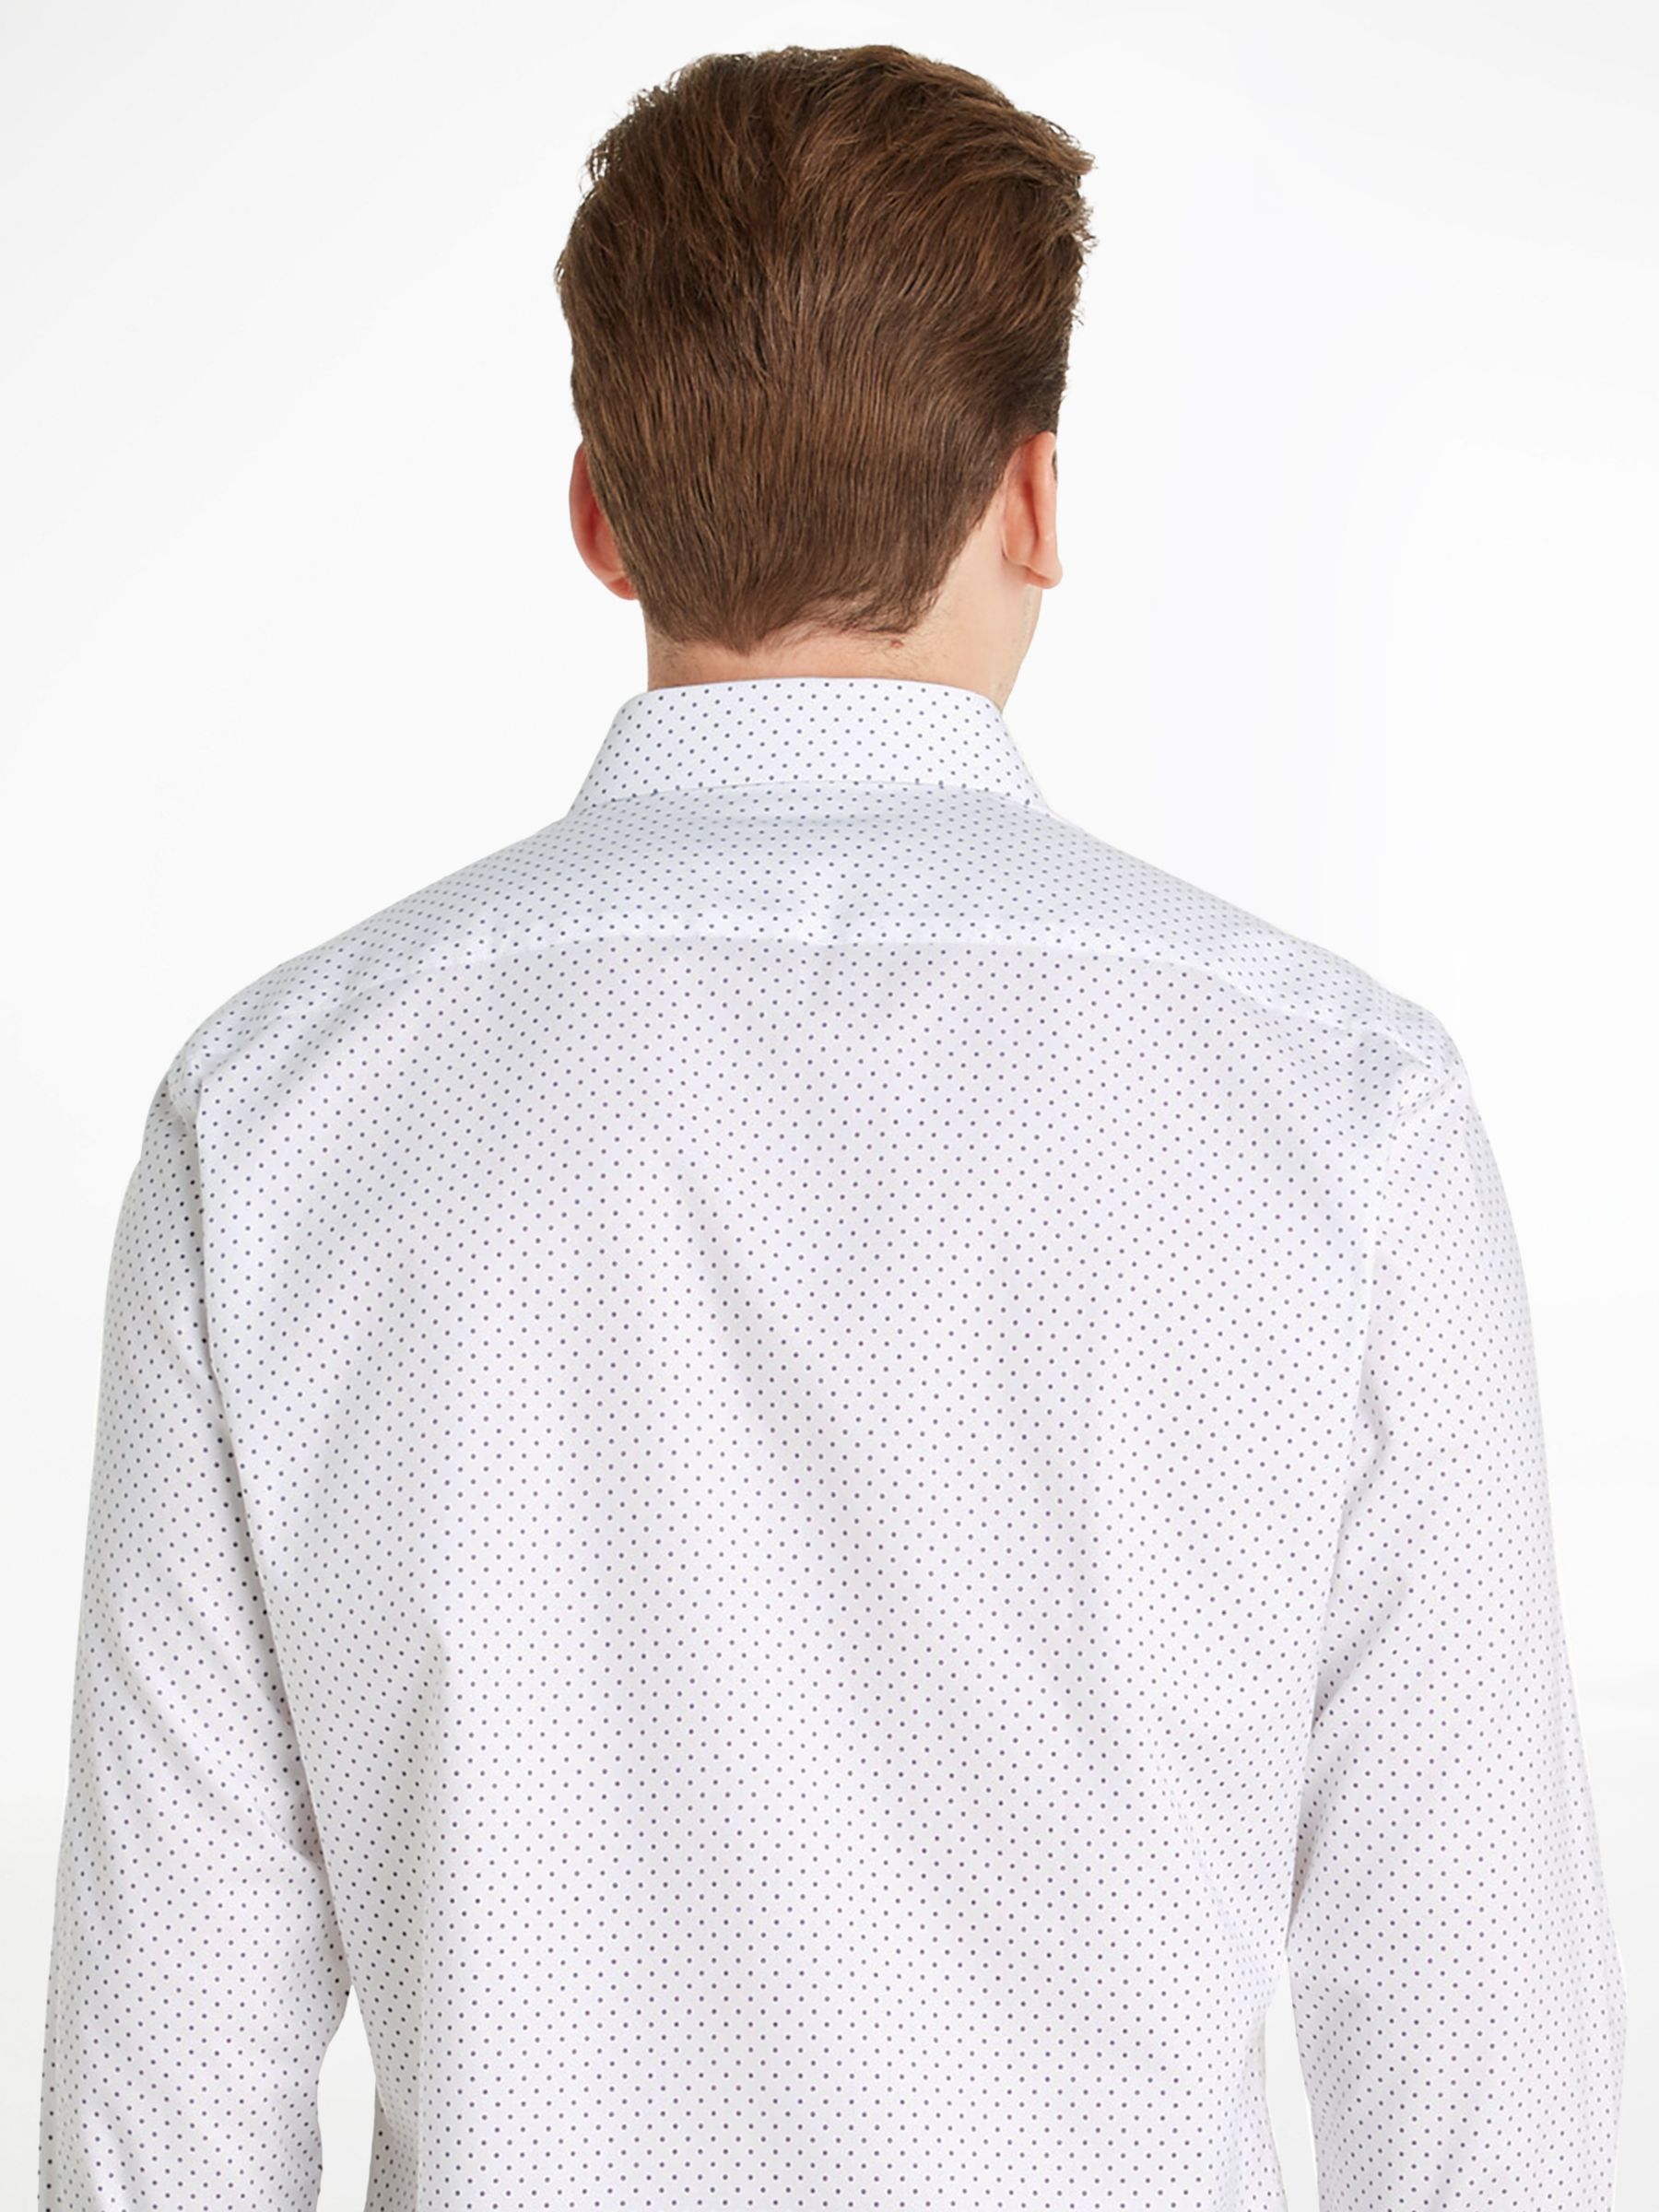 Tommy Hilfiger Dot Print Shirt, White/Navy, 38